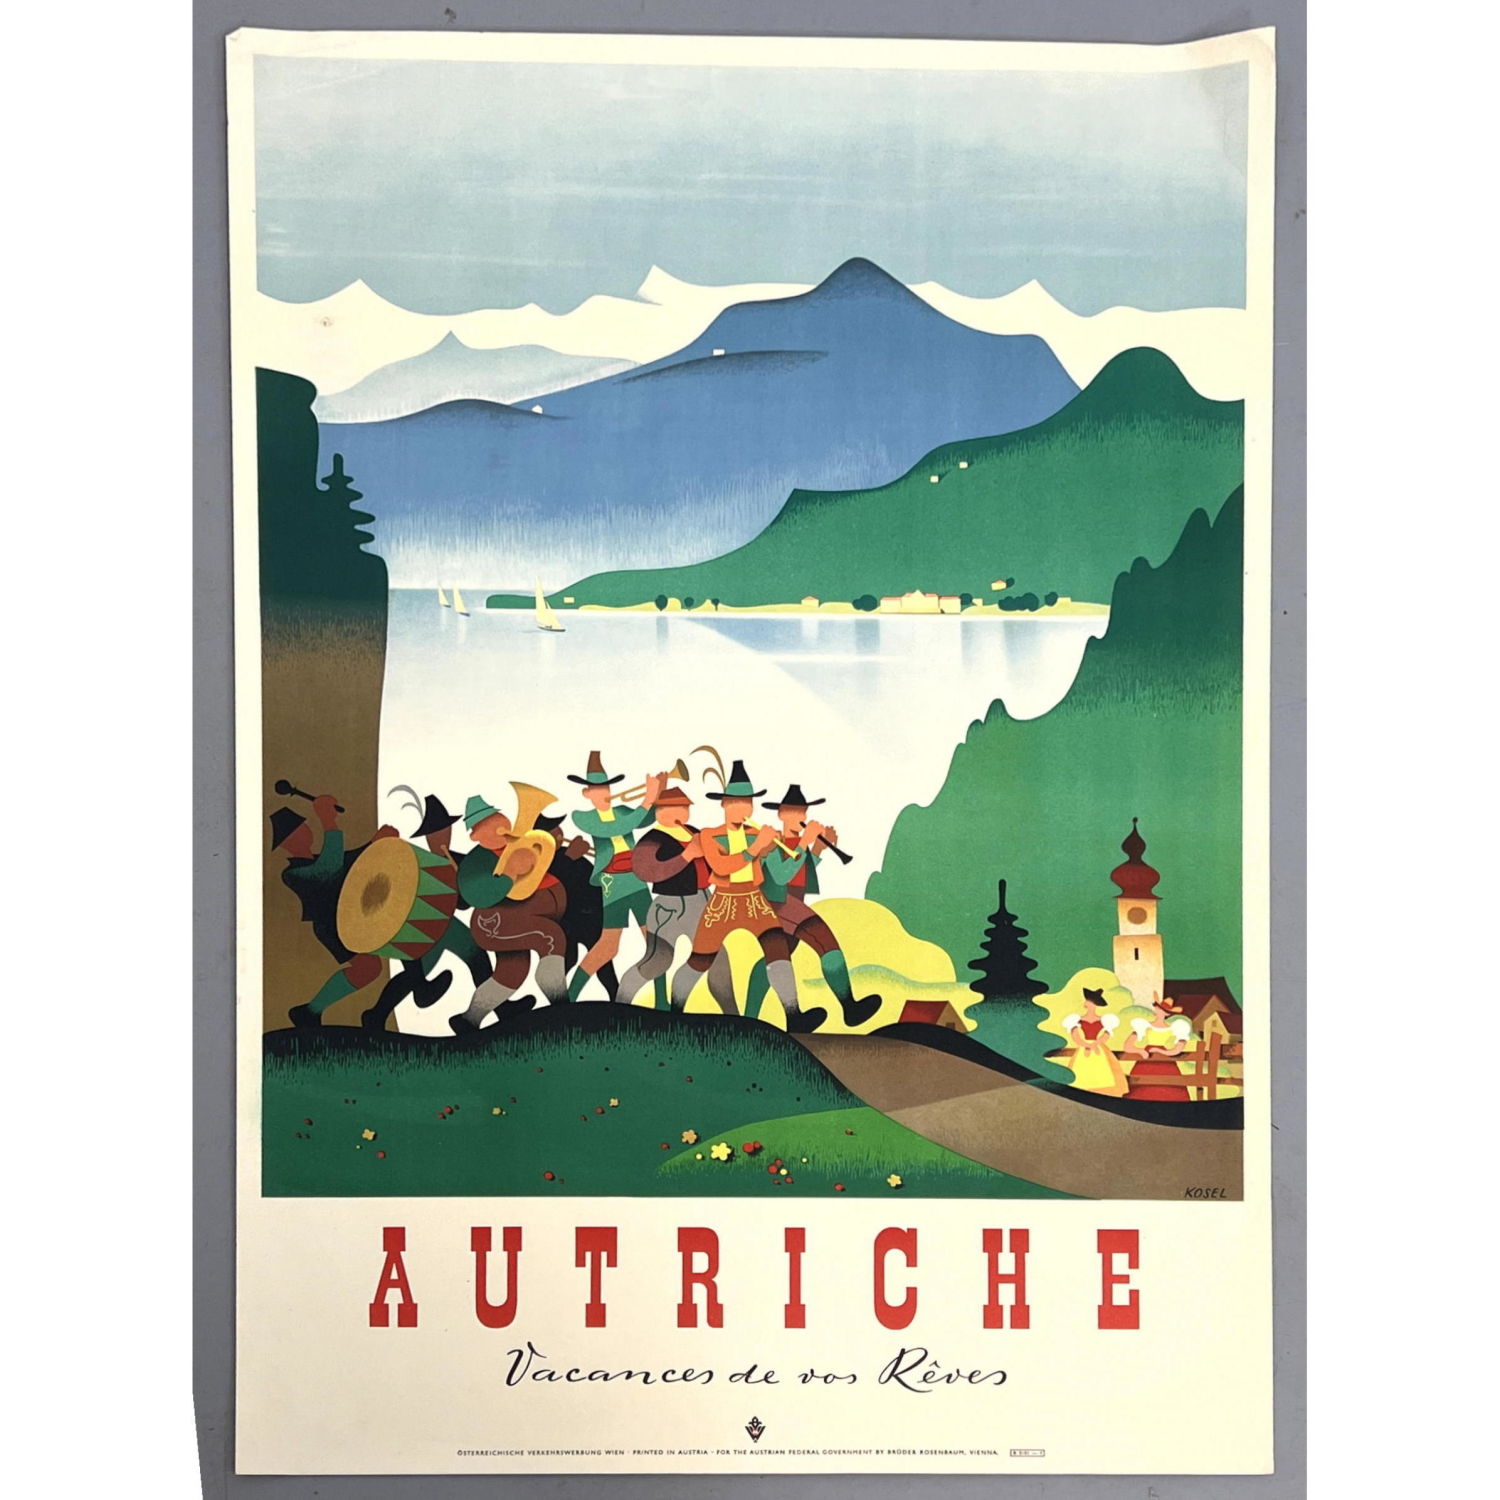 AUTRICHE (AUSTRIA) Travel Advertising